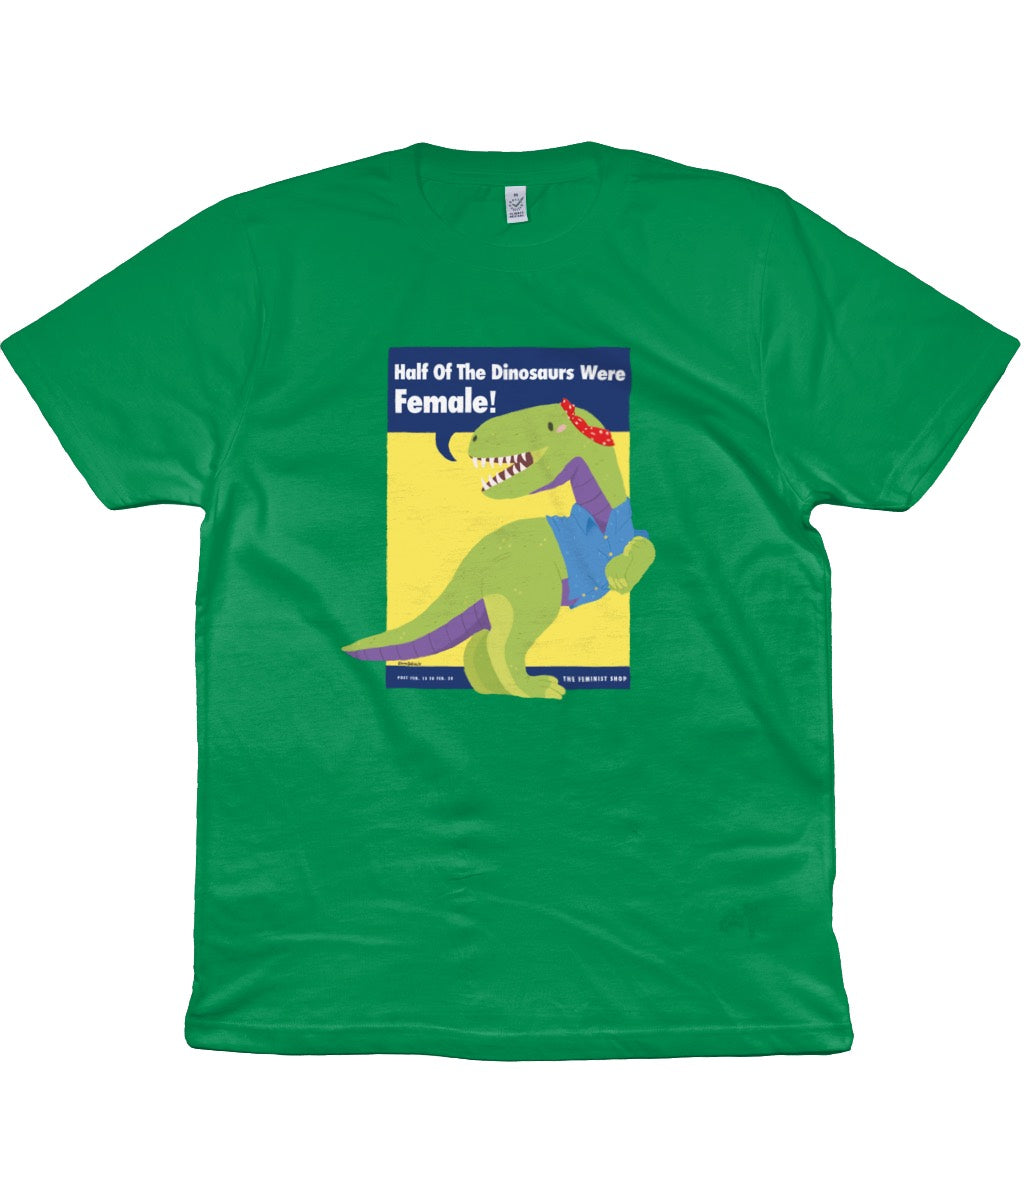 Feminist T Shirt - Half of the Dinosaurs were Female!